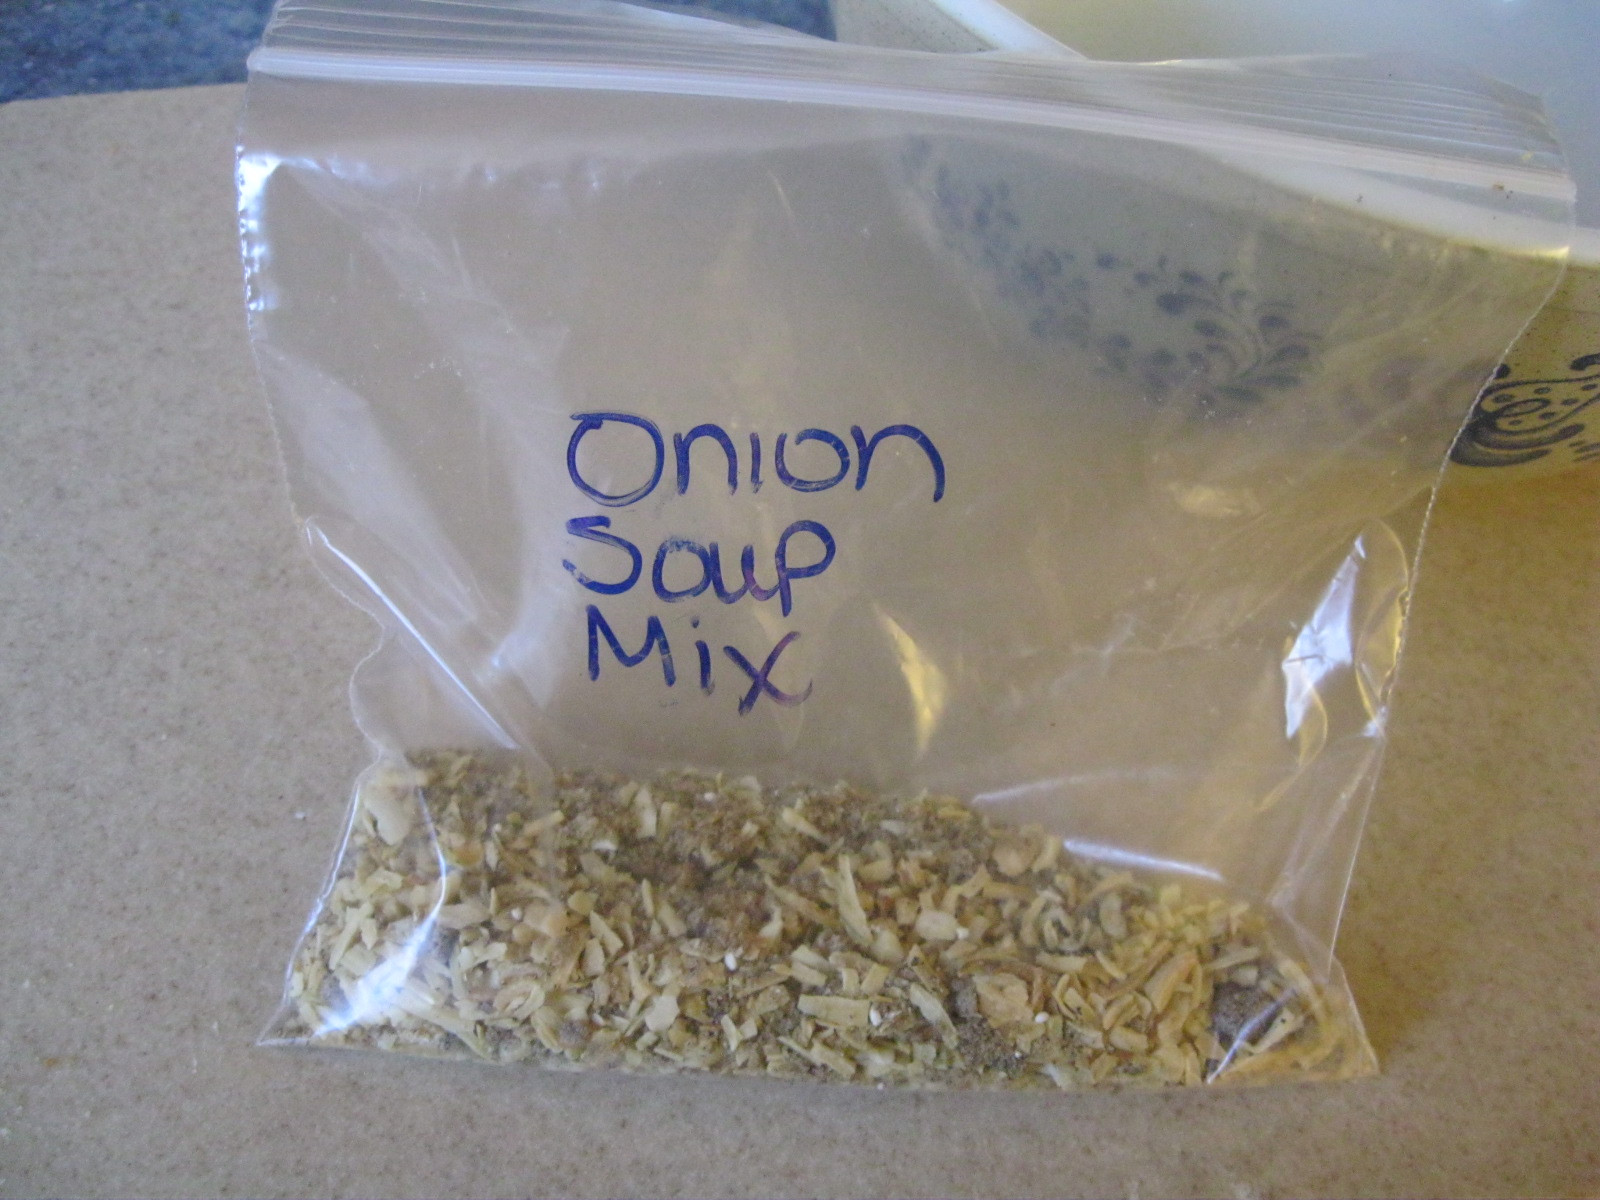 Lipton Onion Soup Mix Ingredients
 TIP GARDEN Make Your Own Lipton ion Soup Mix